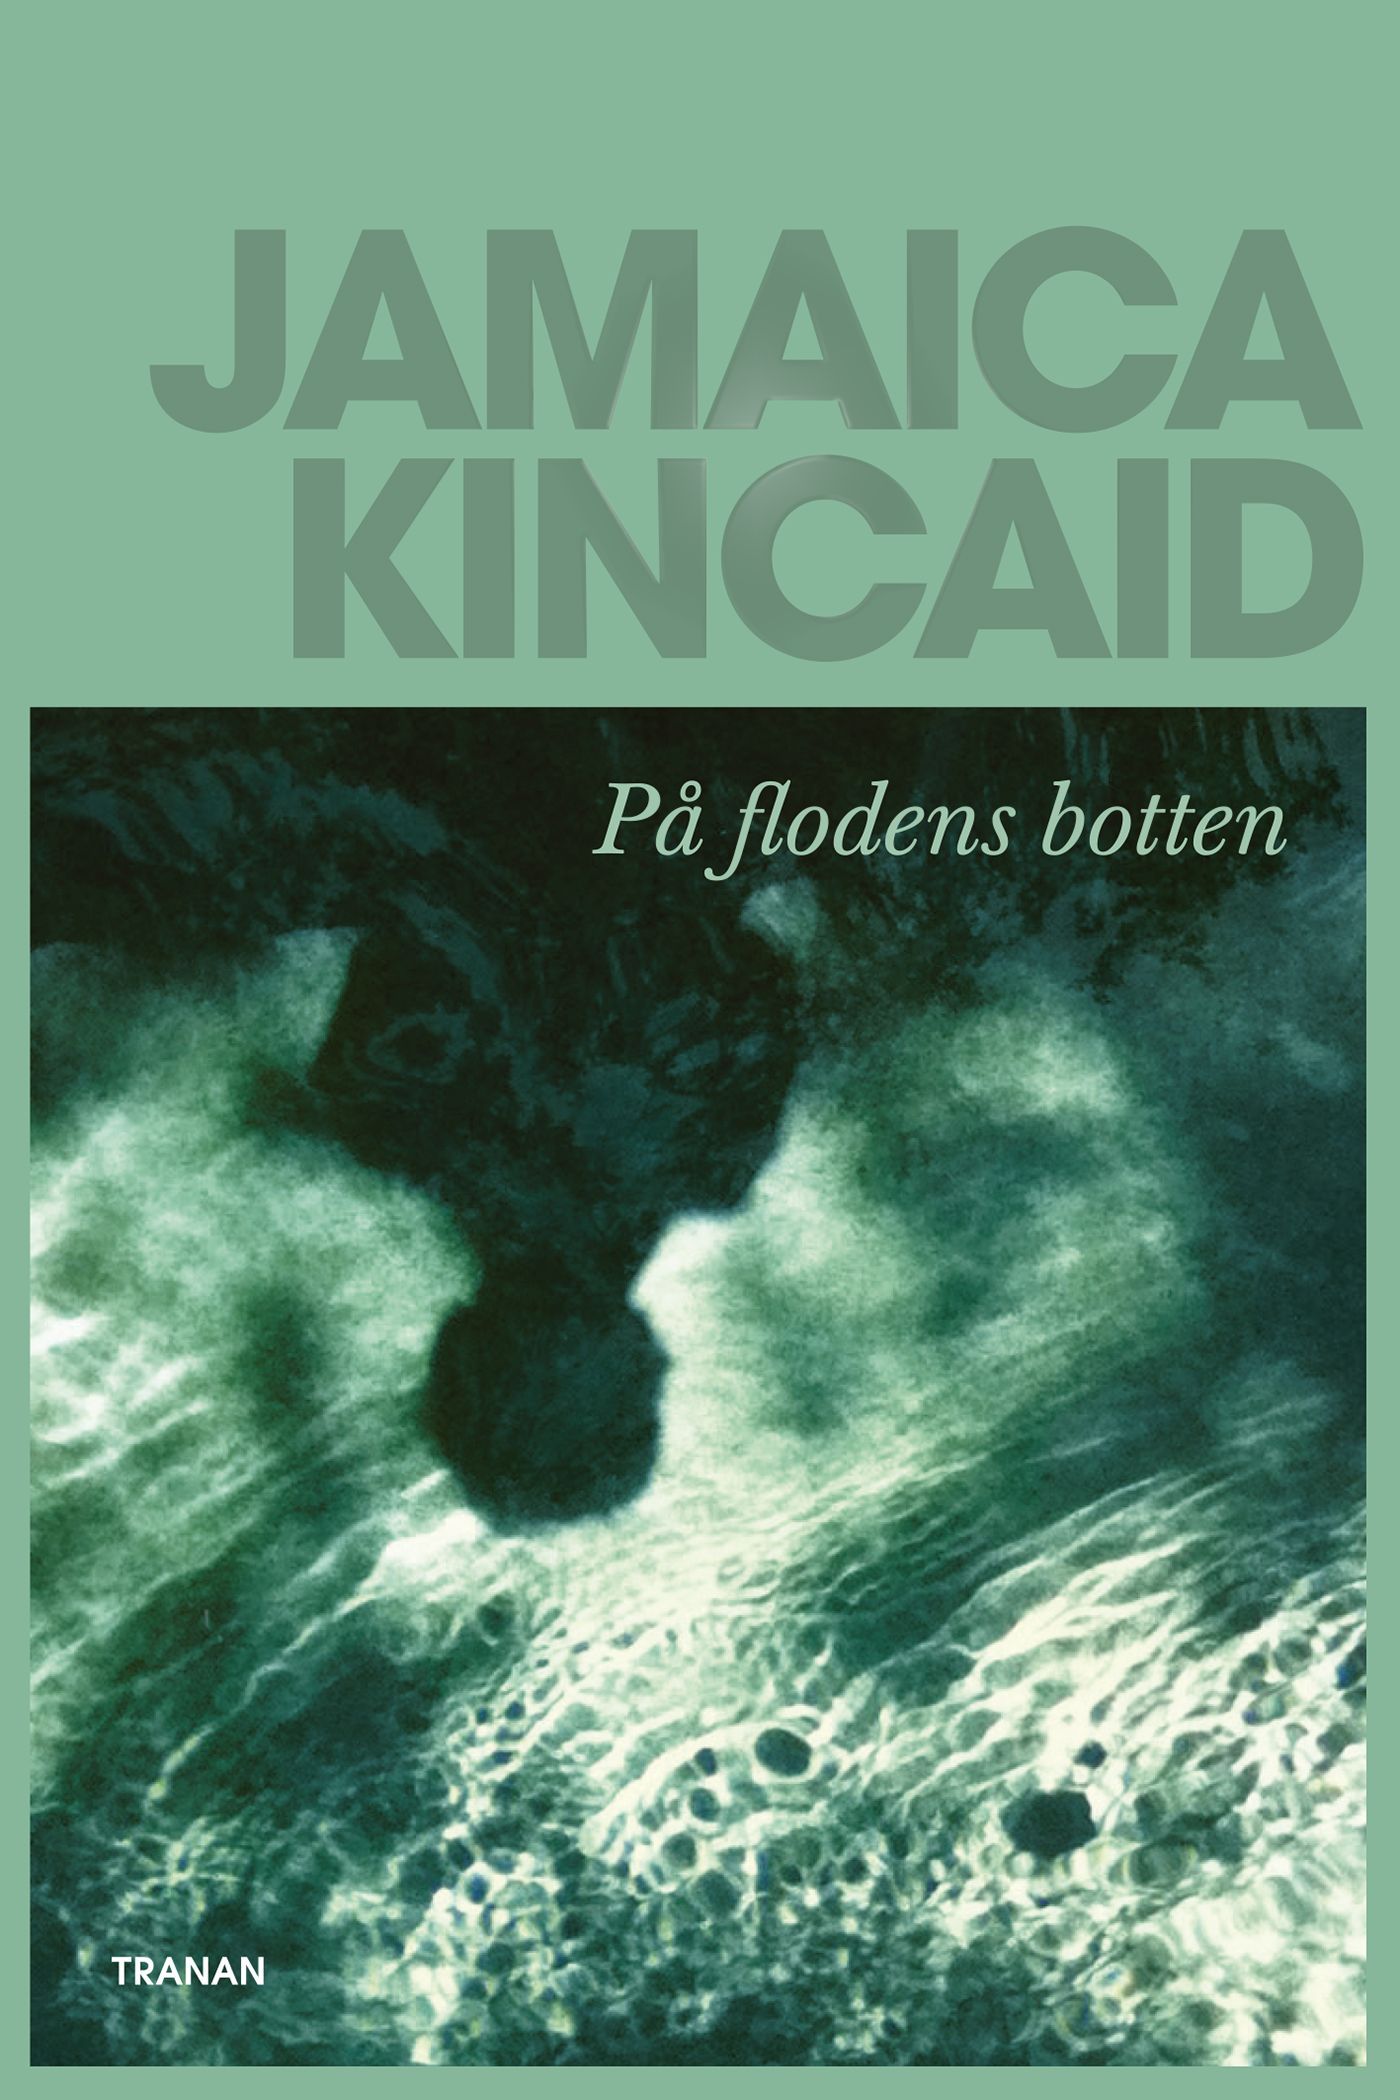 På flodens botten, eBook by Jamaica Kincaid